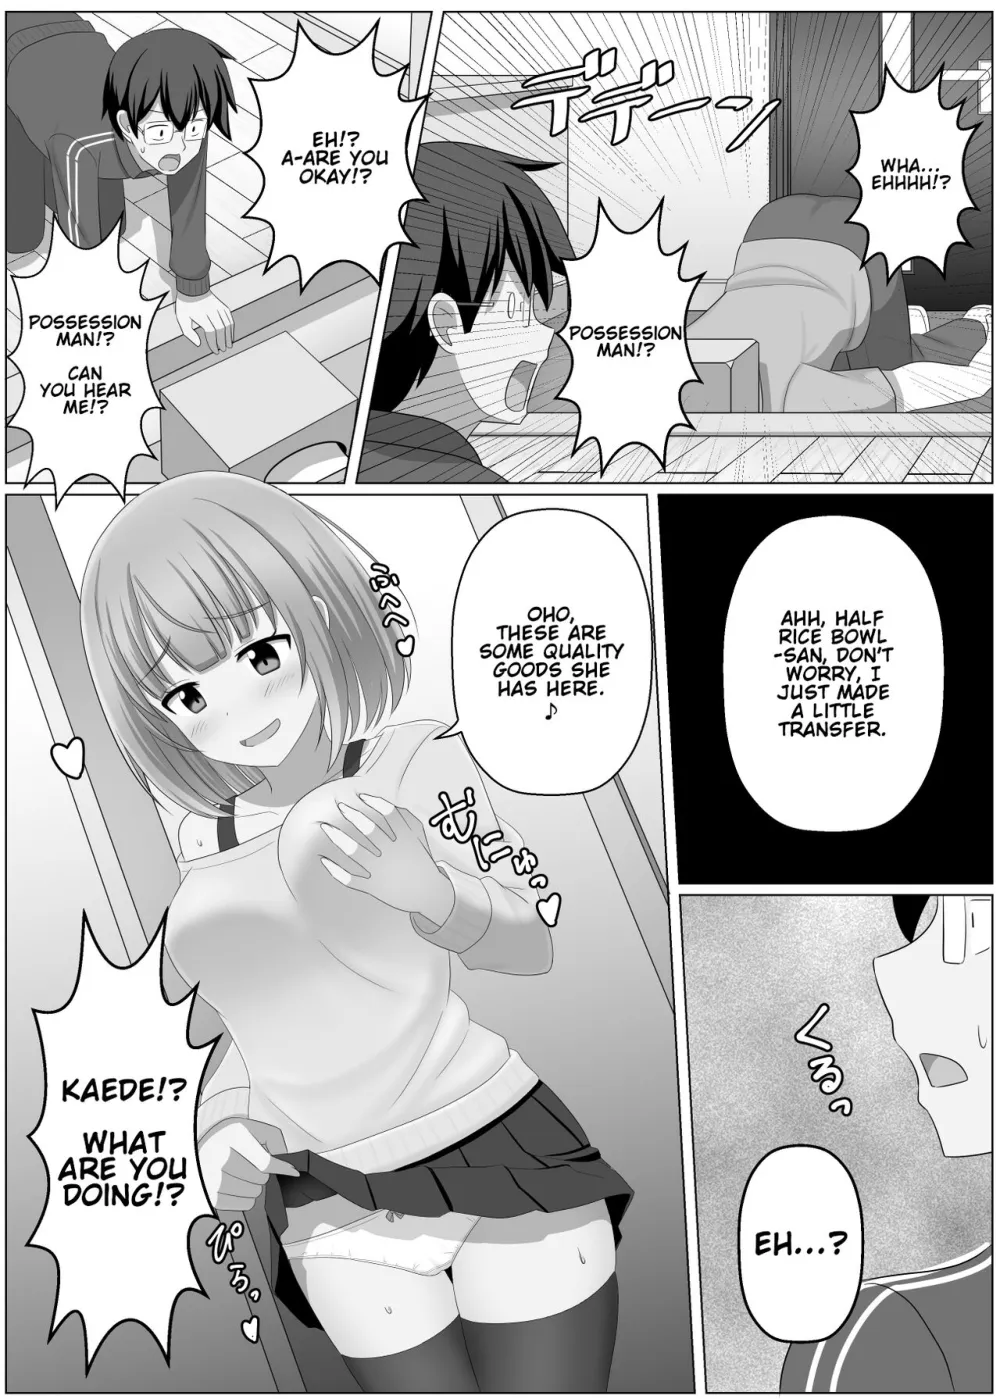 Possession Channel - English Hentai Manga (Page 5)